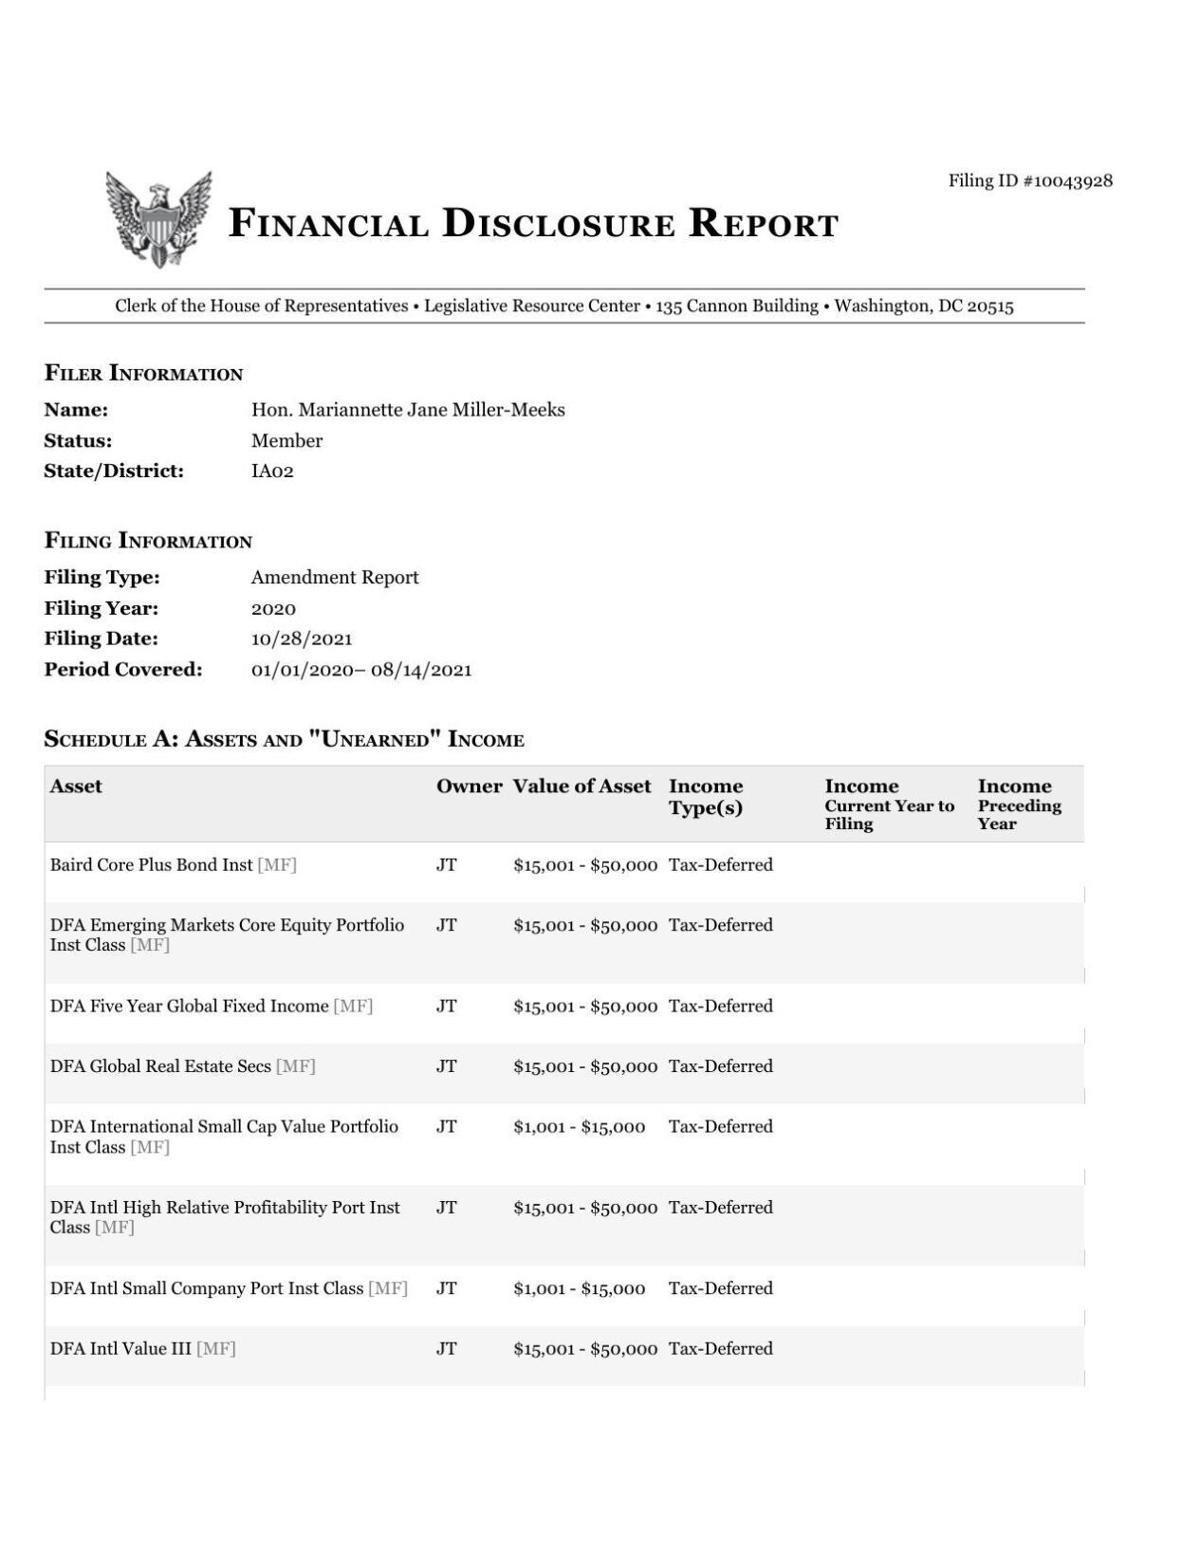 Miller-Meeks amended 2020 financial disclosure report